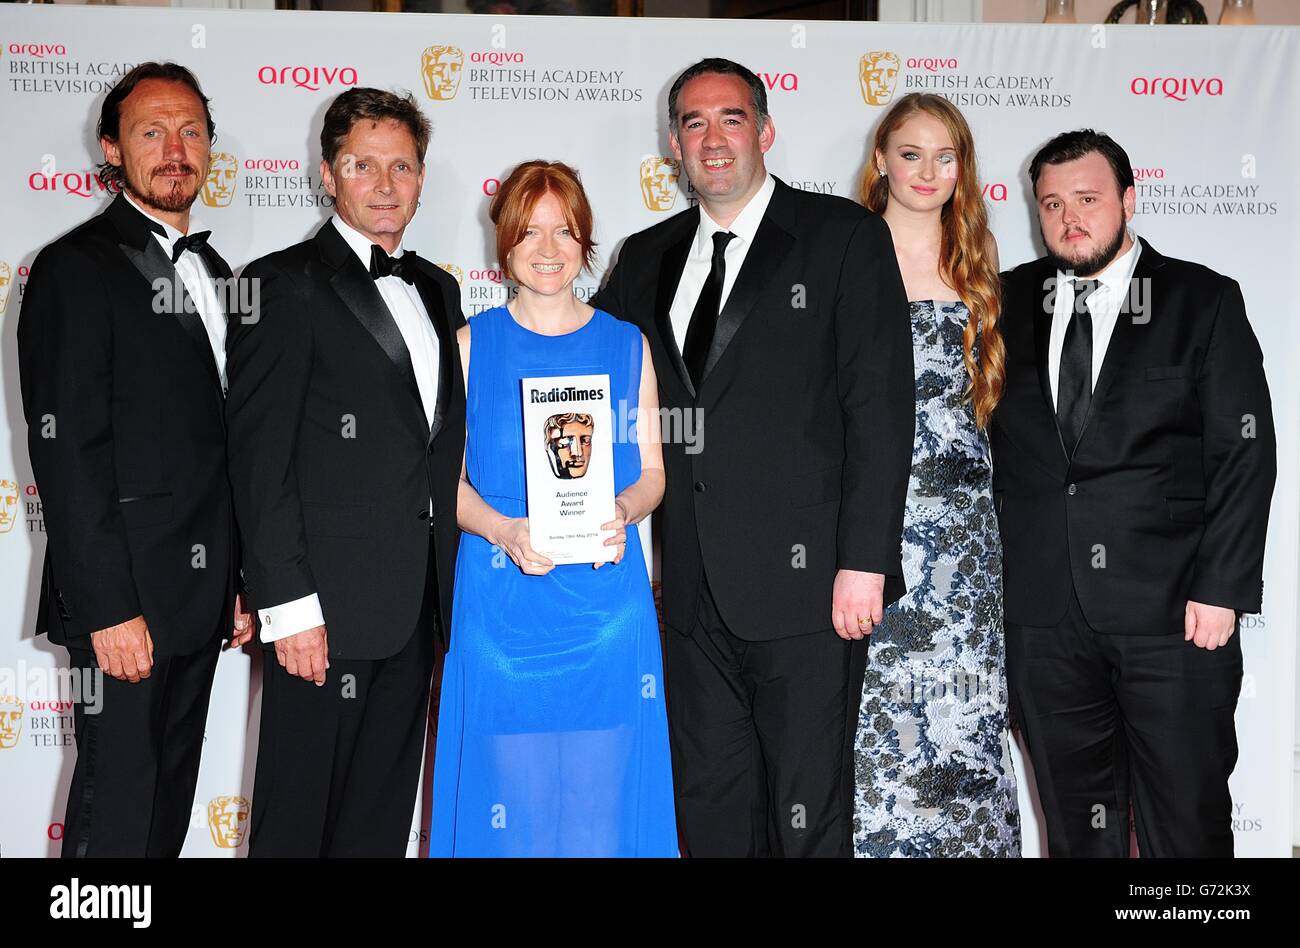 Arqiva British Academy Television Awards - Press Room - London Stock Photo